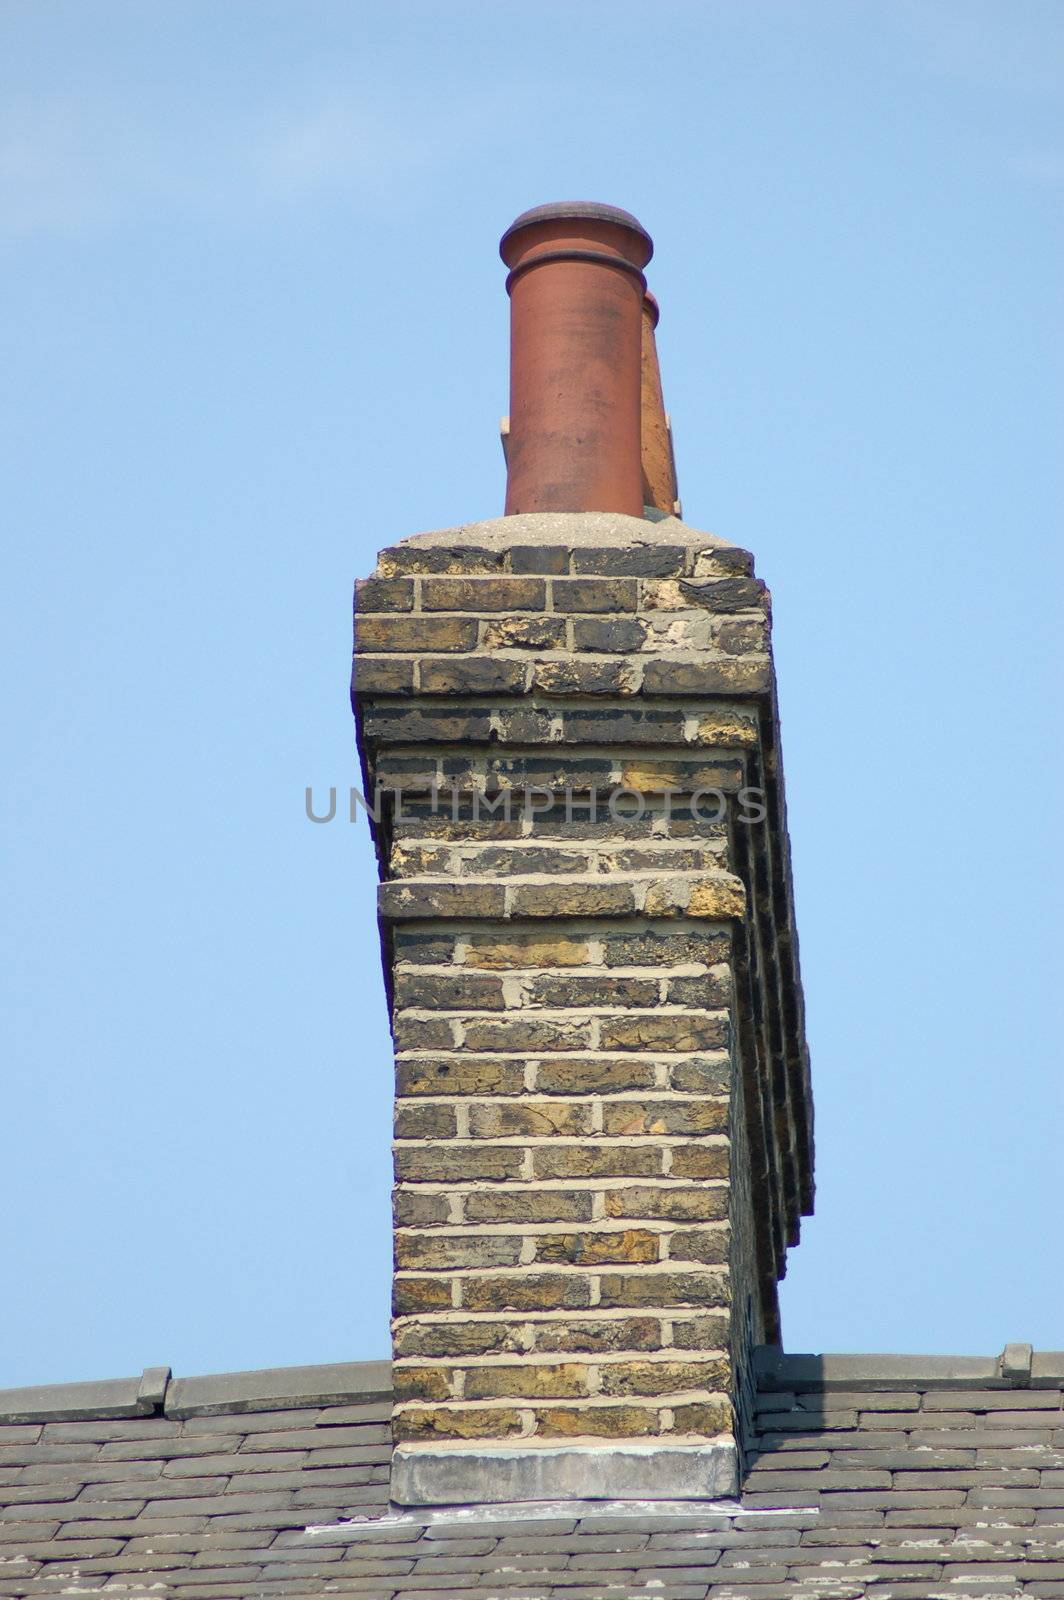 Typical brick chimney